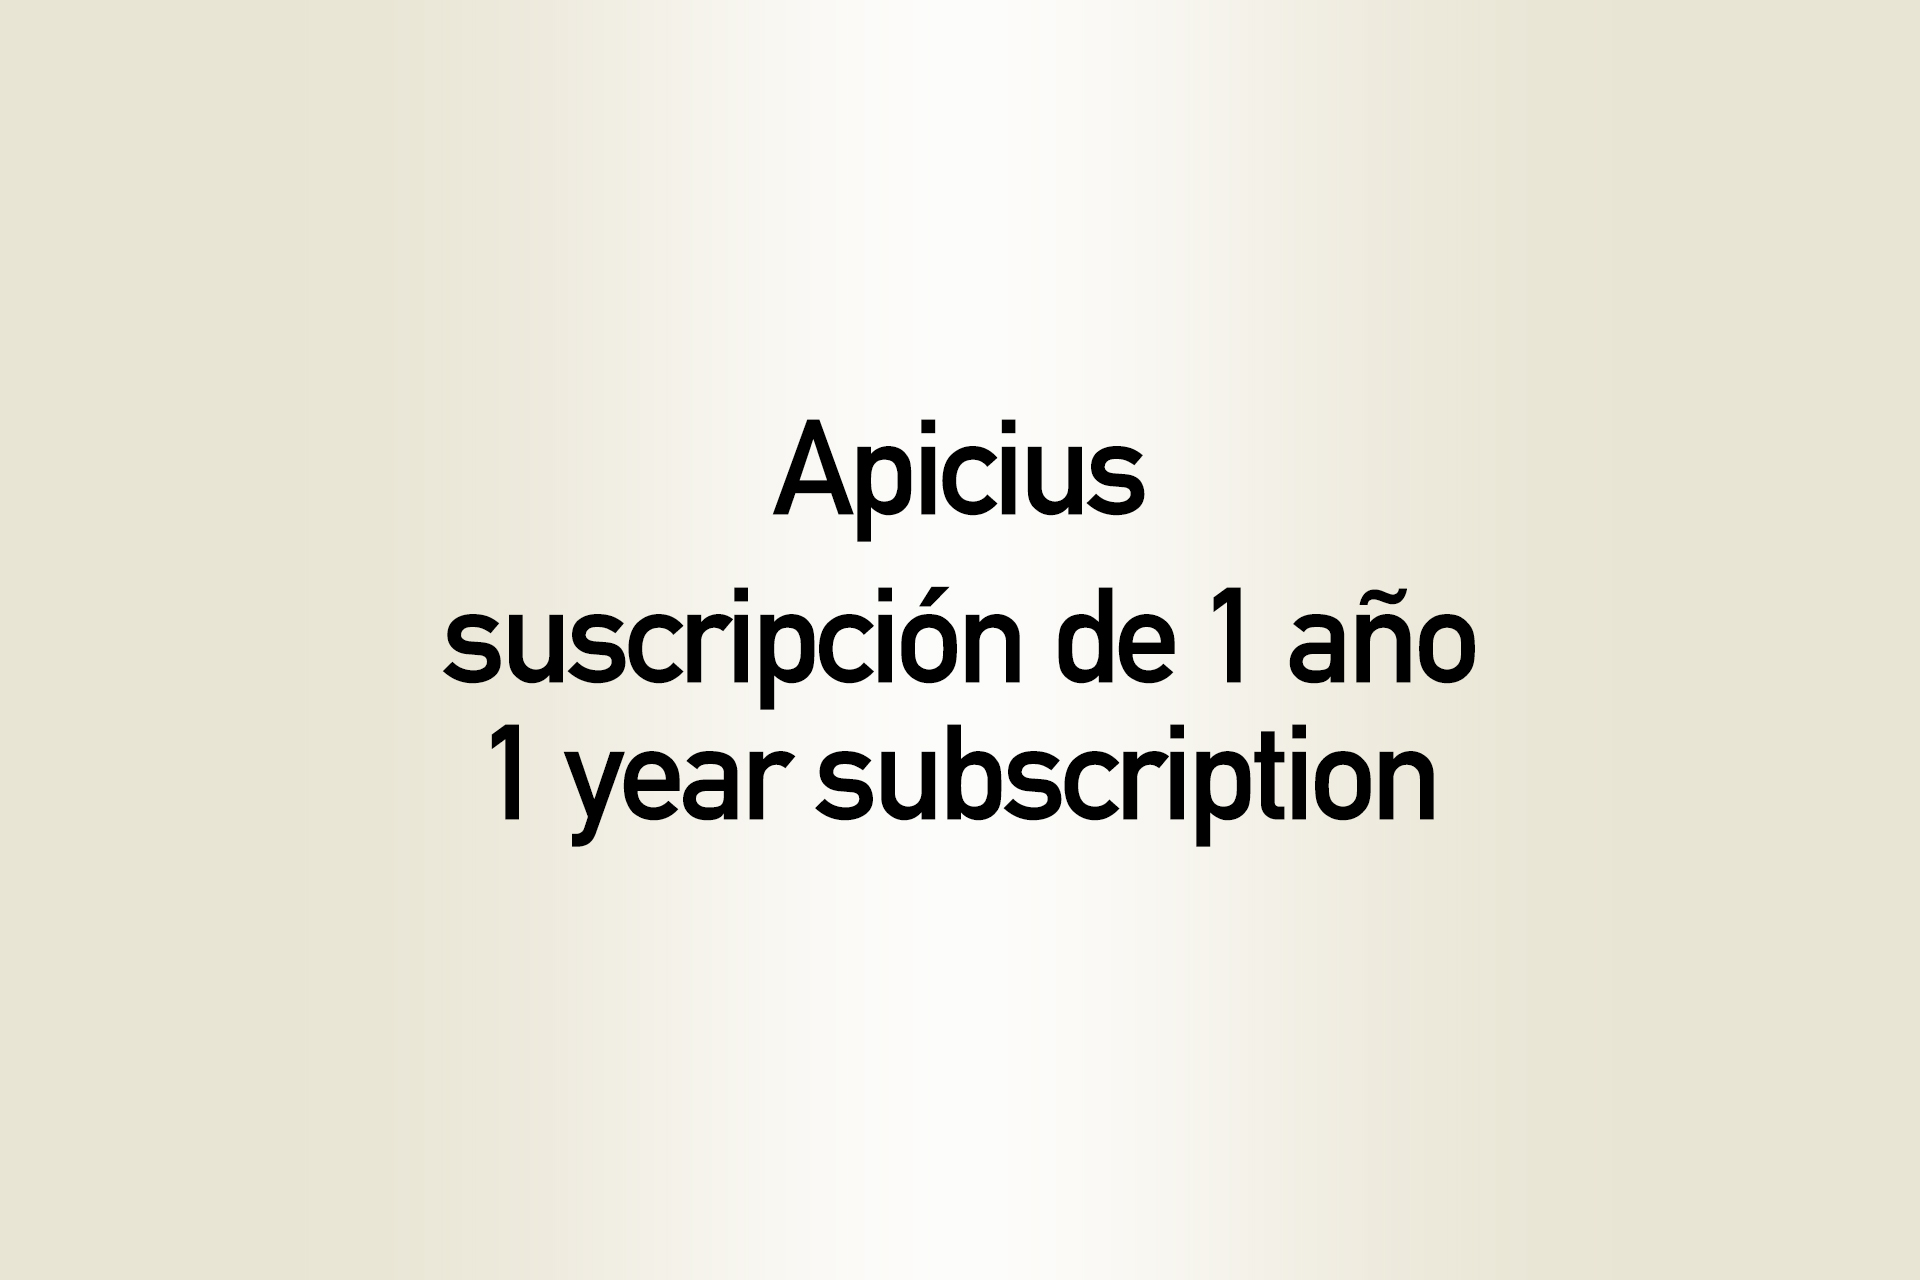 NEW - Apicius, 1 year subscription